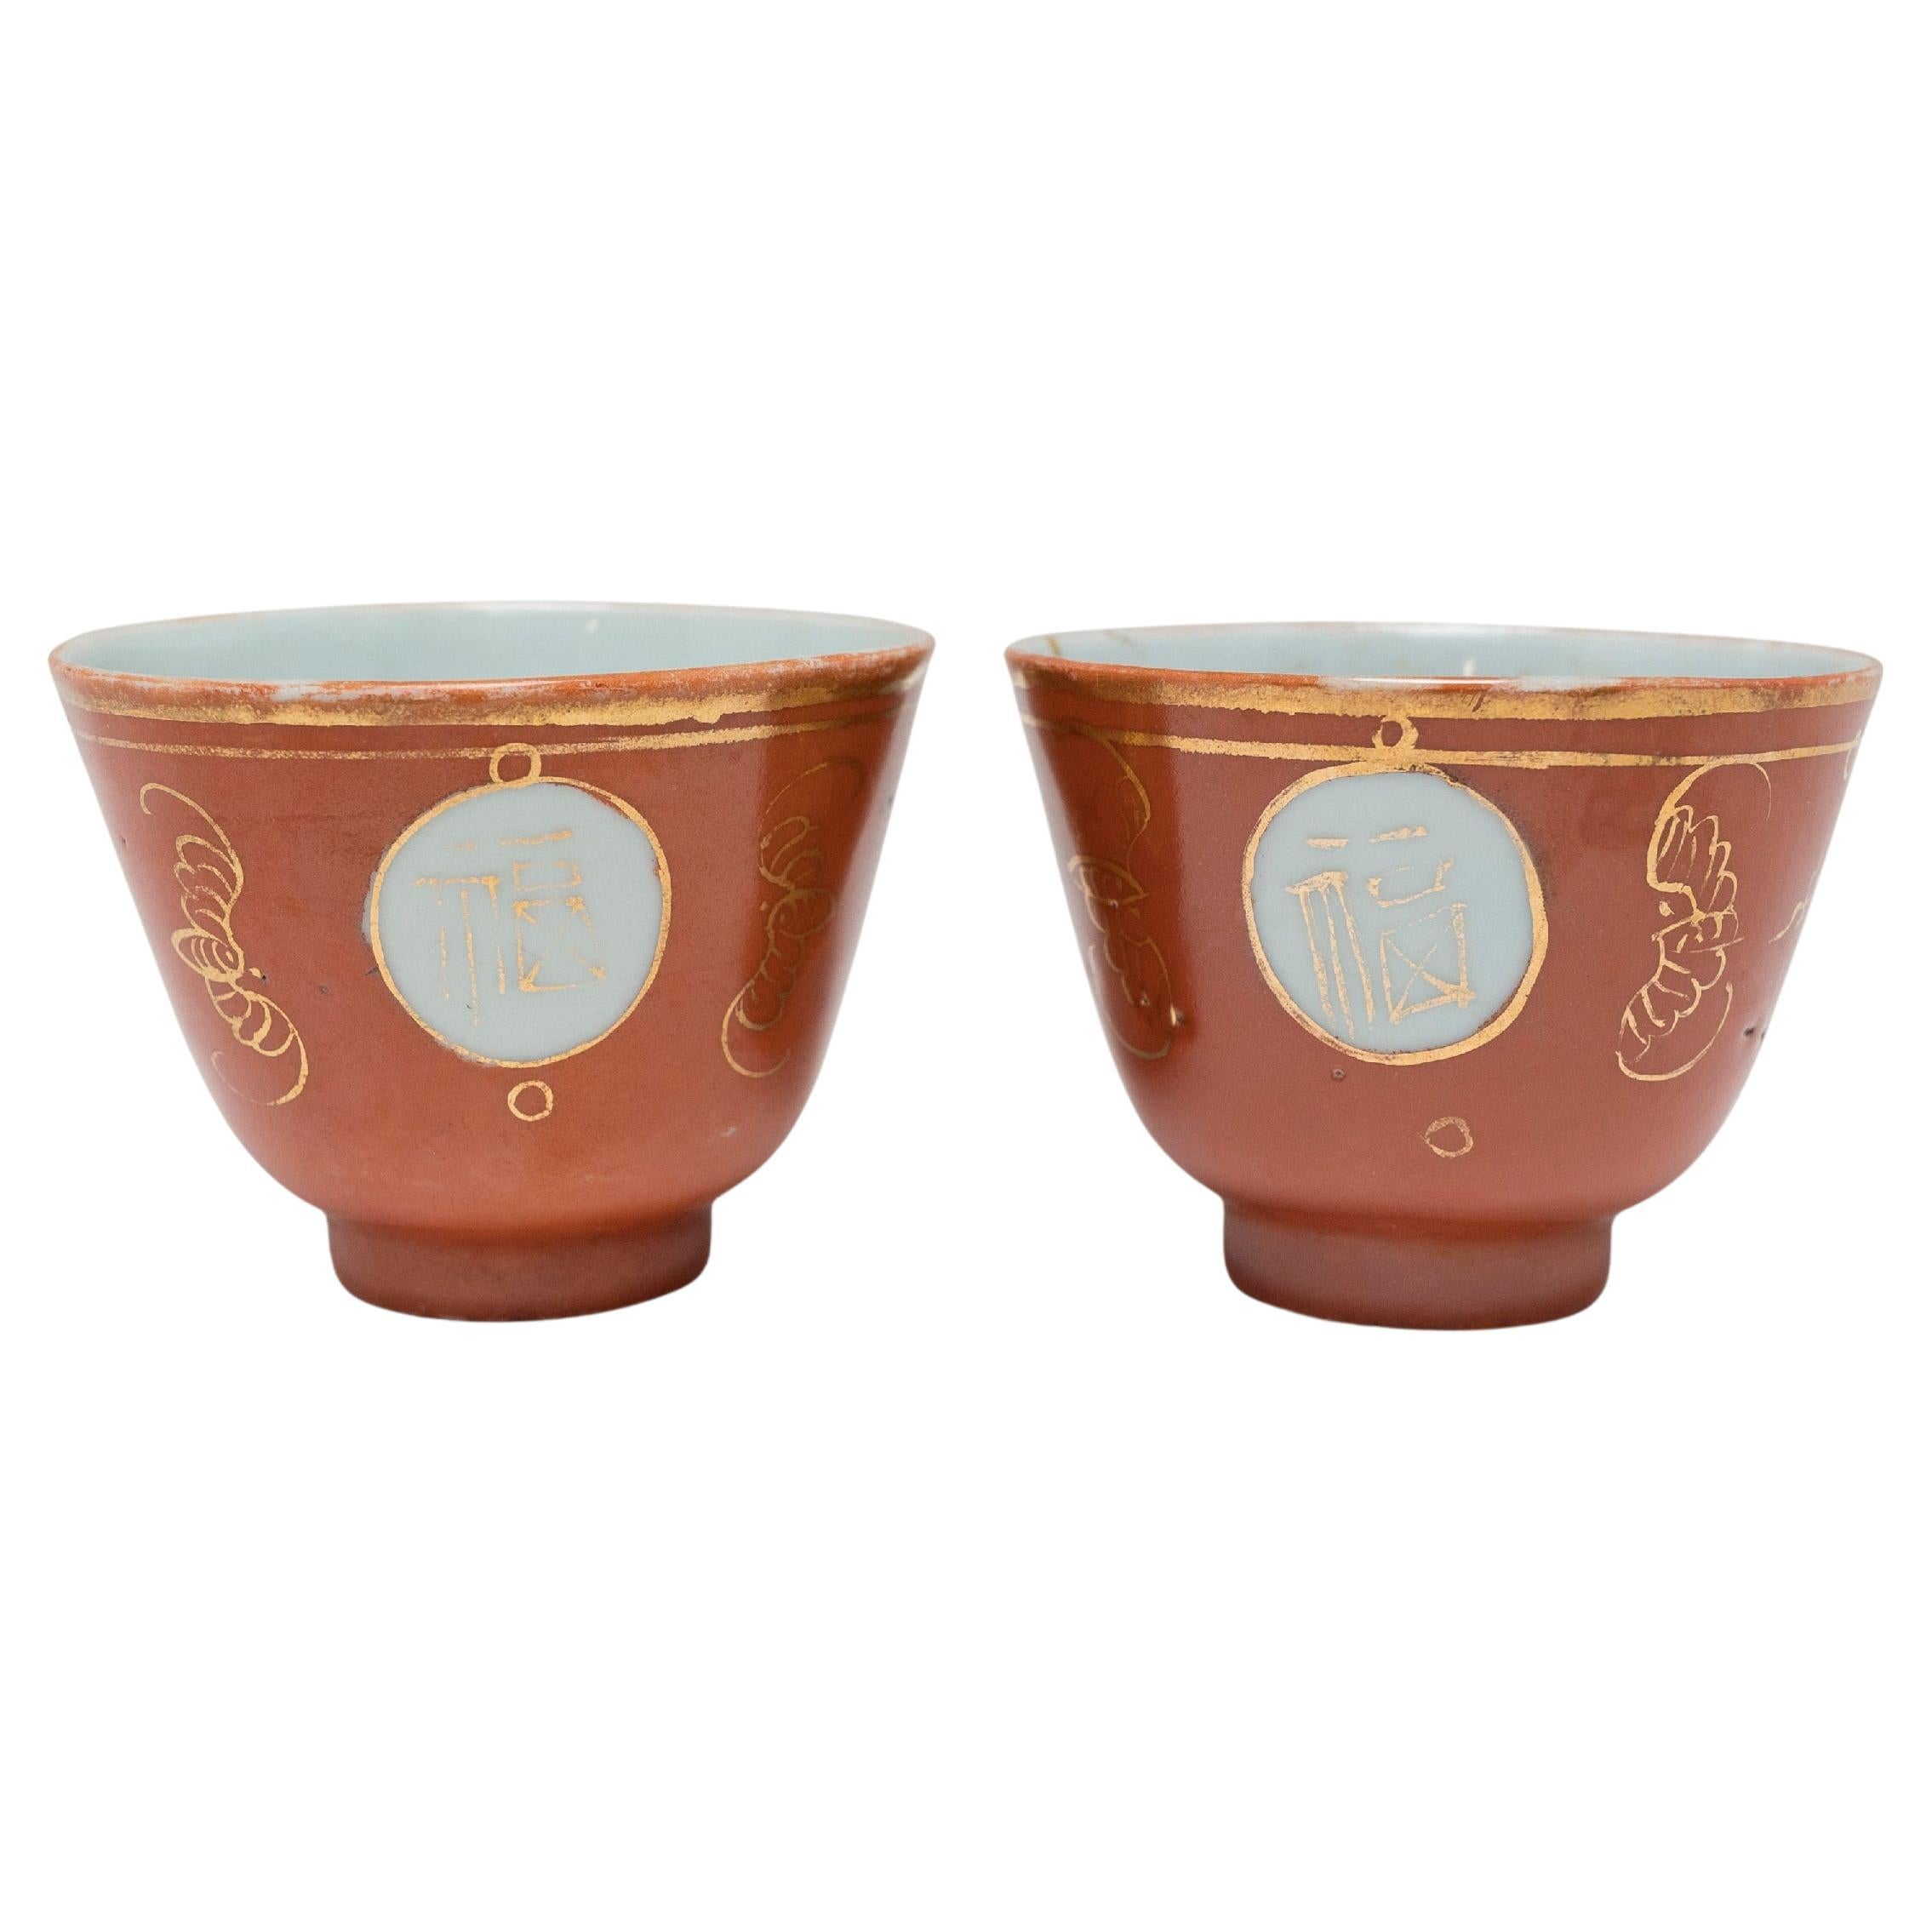 Pair of Gilt Orange Chinese Teacups